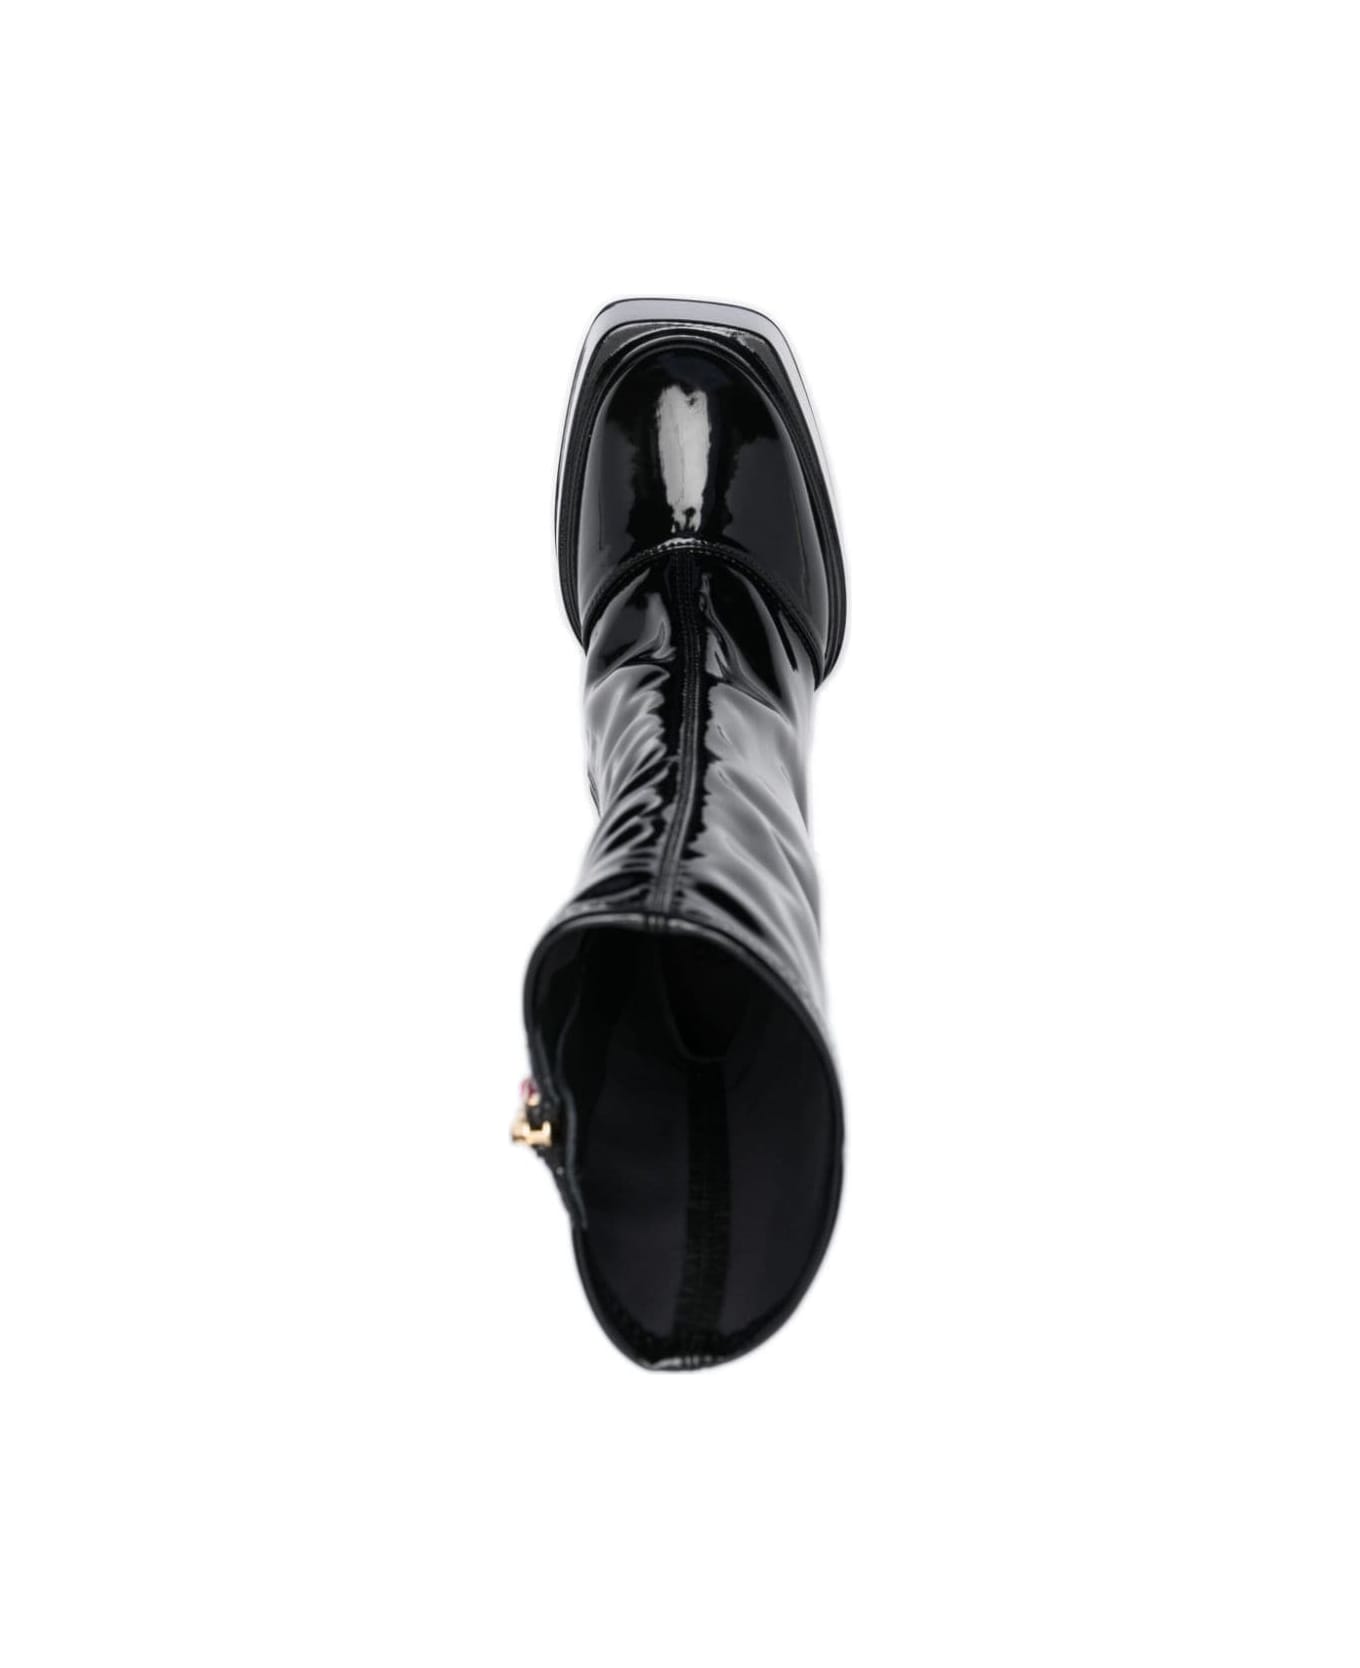 3JUIN Mila Ankle Boots - Mok Fluid Black